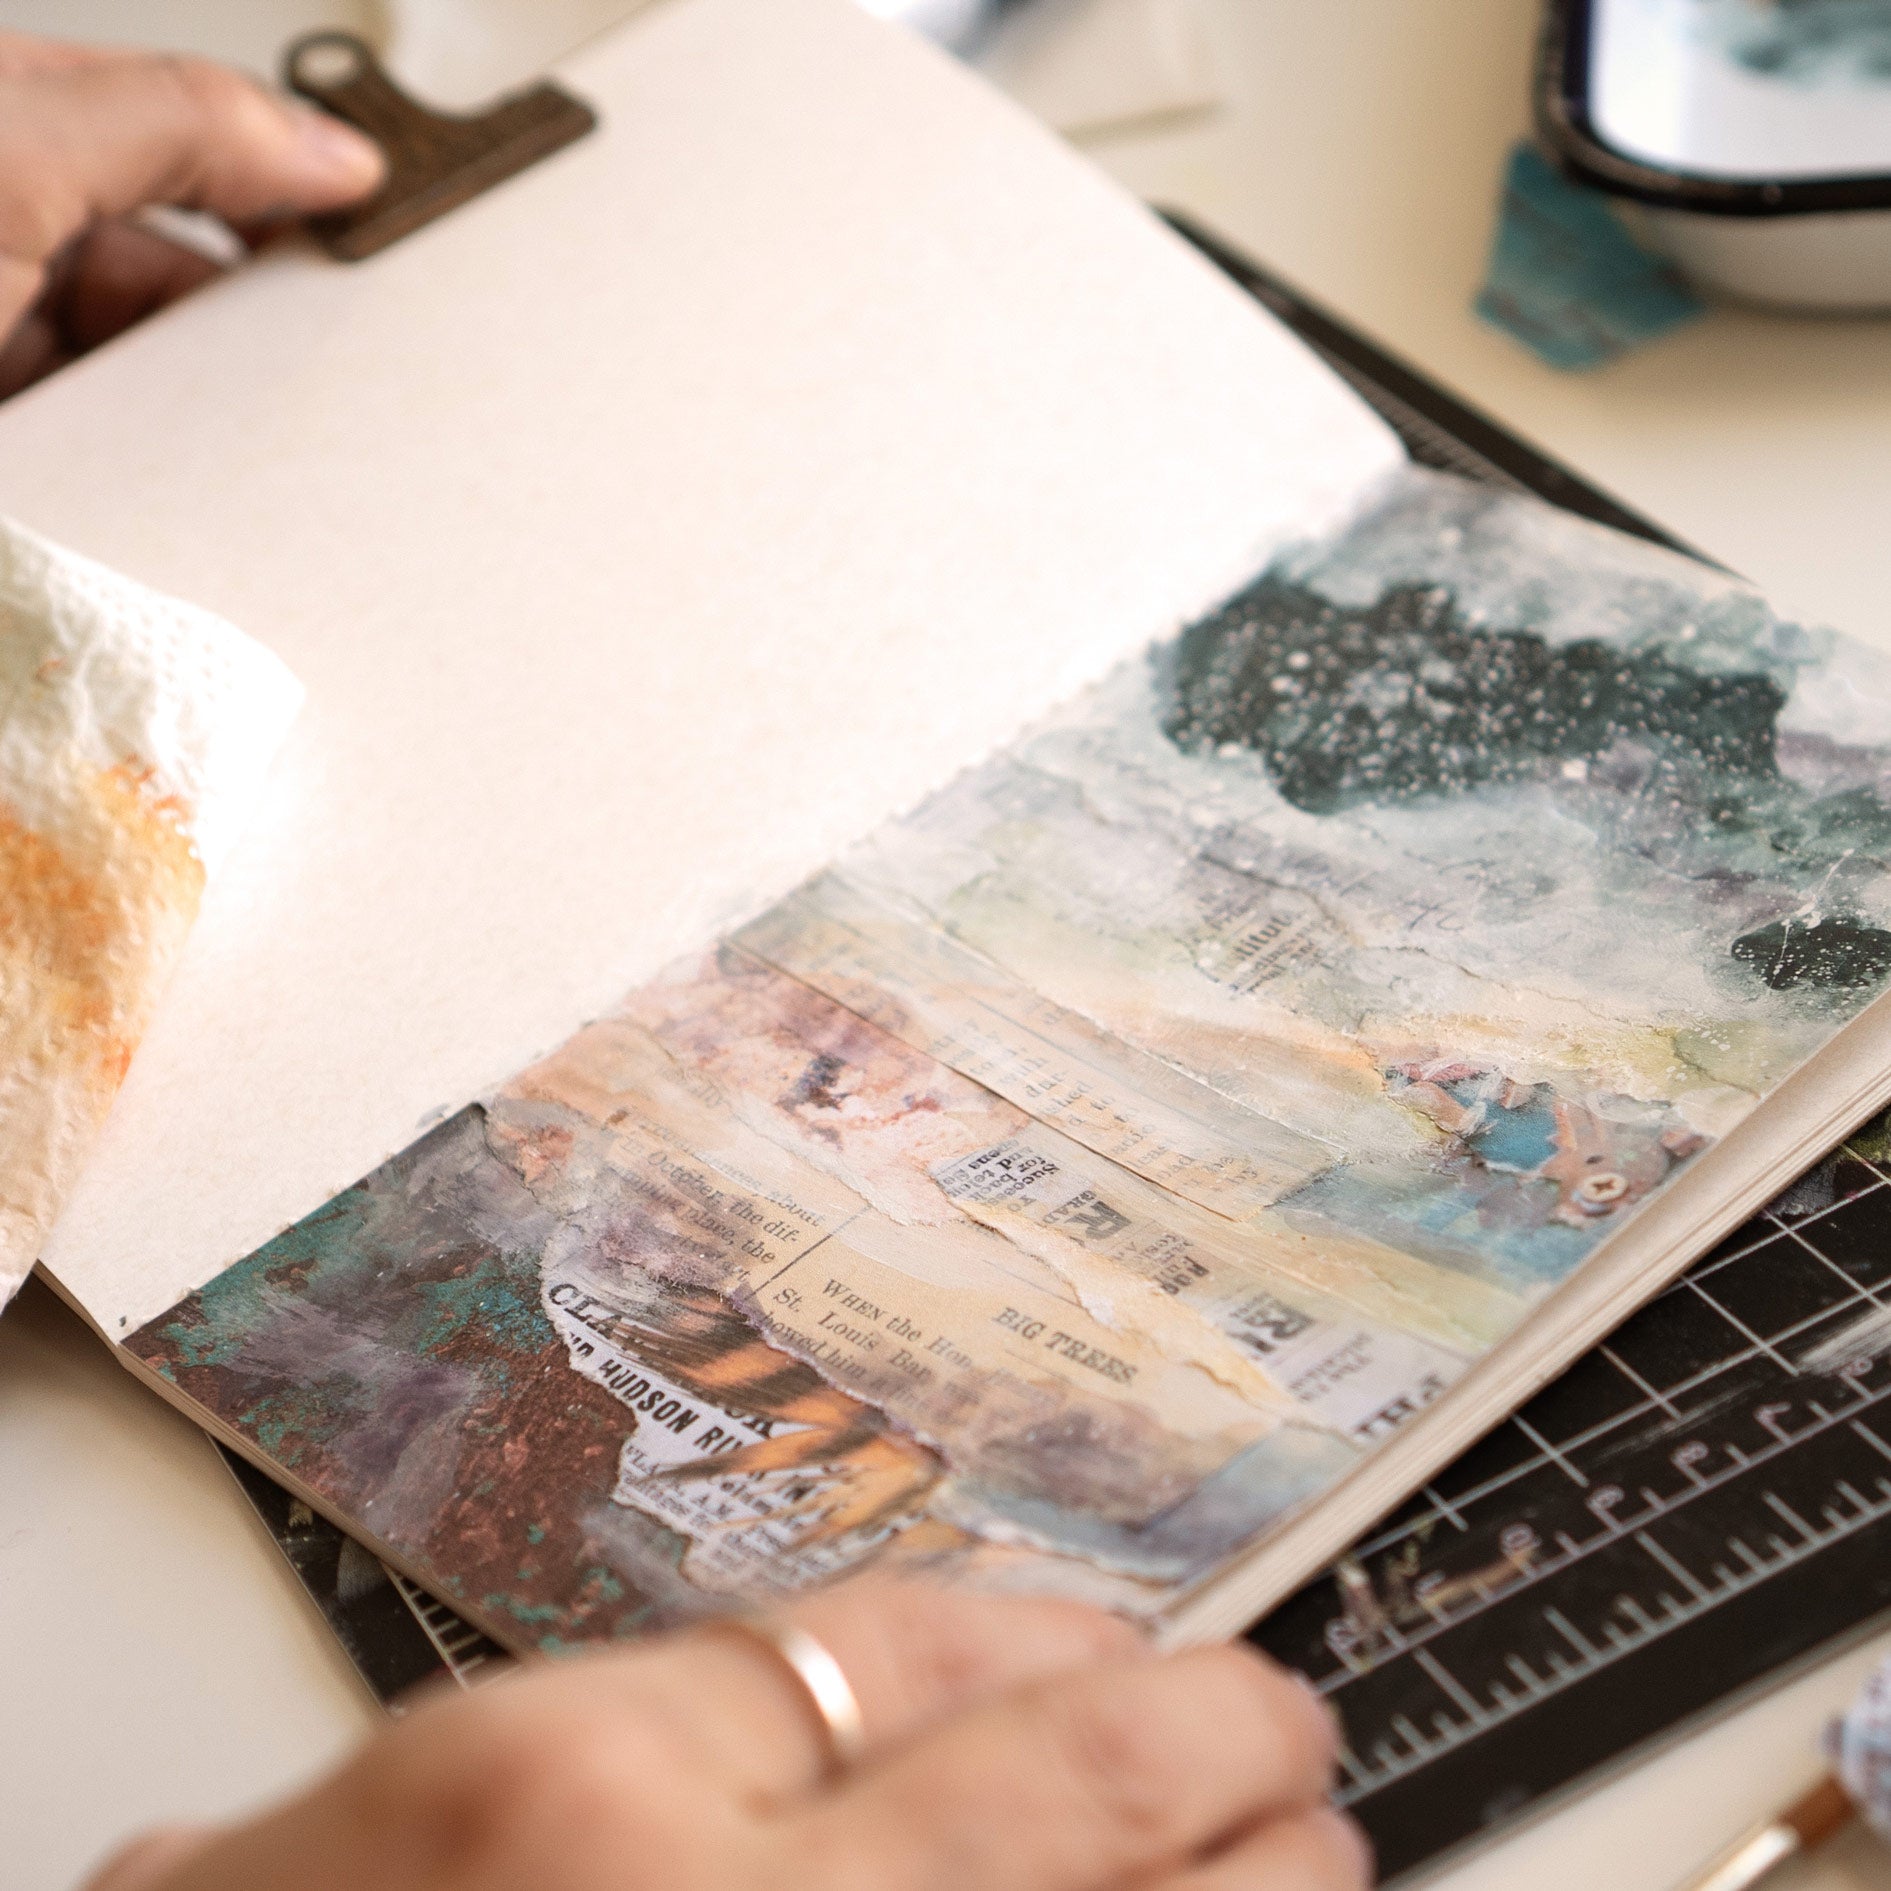 Lagniappe Tag Journal Kit– Let's Make Art